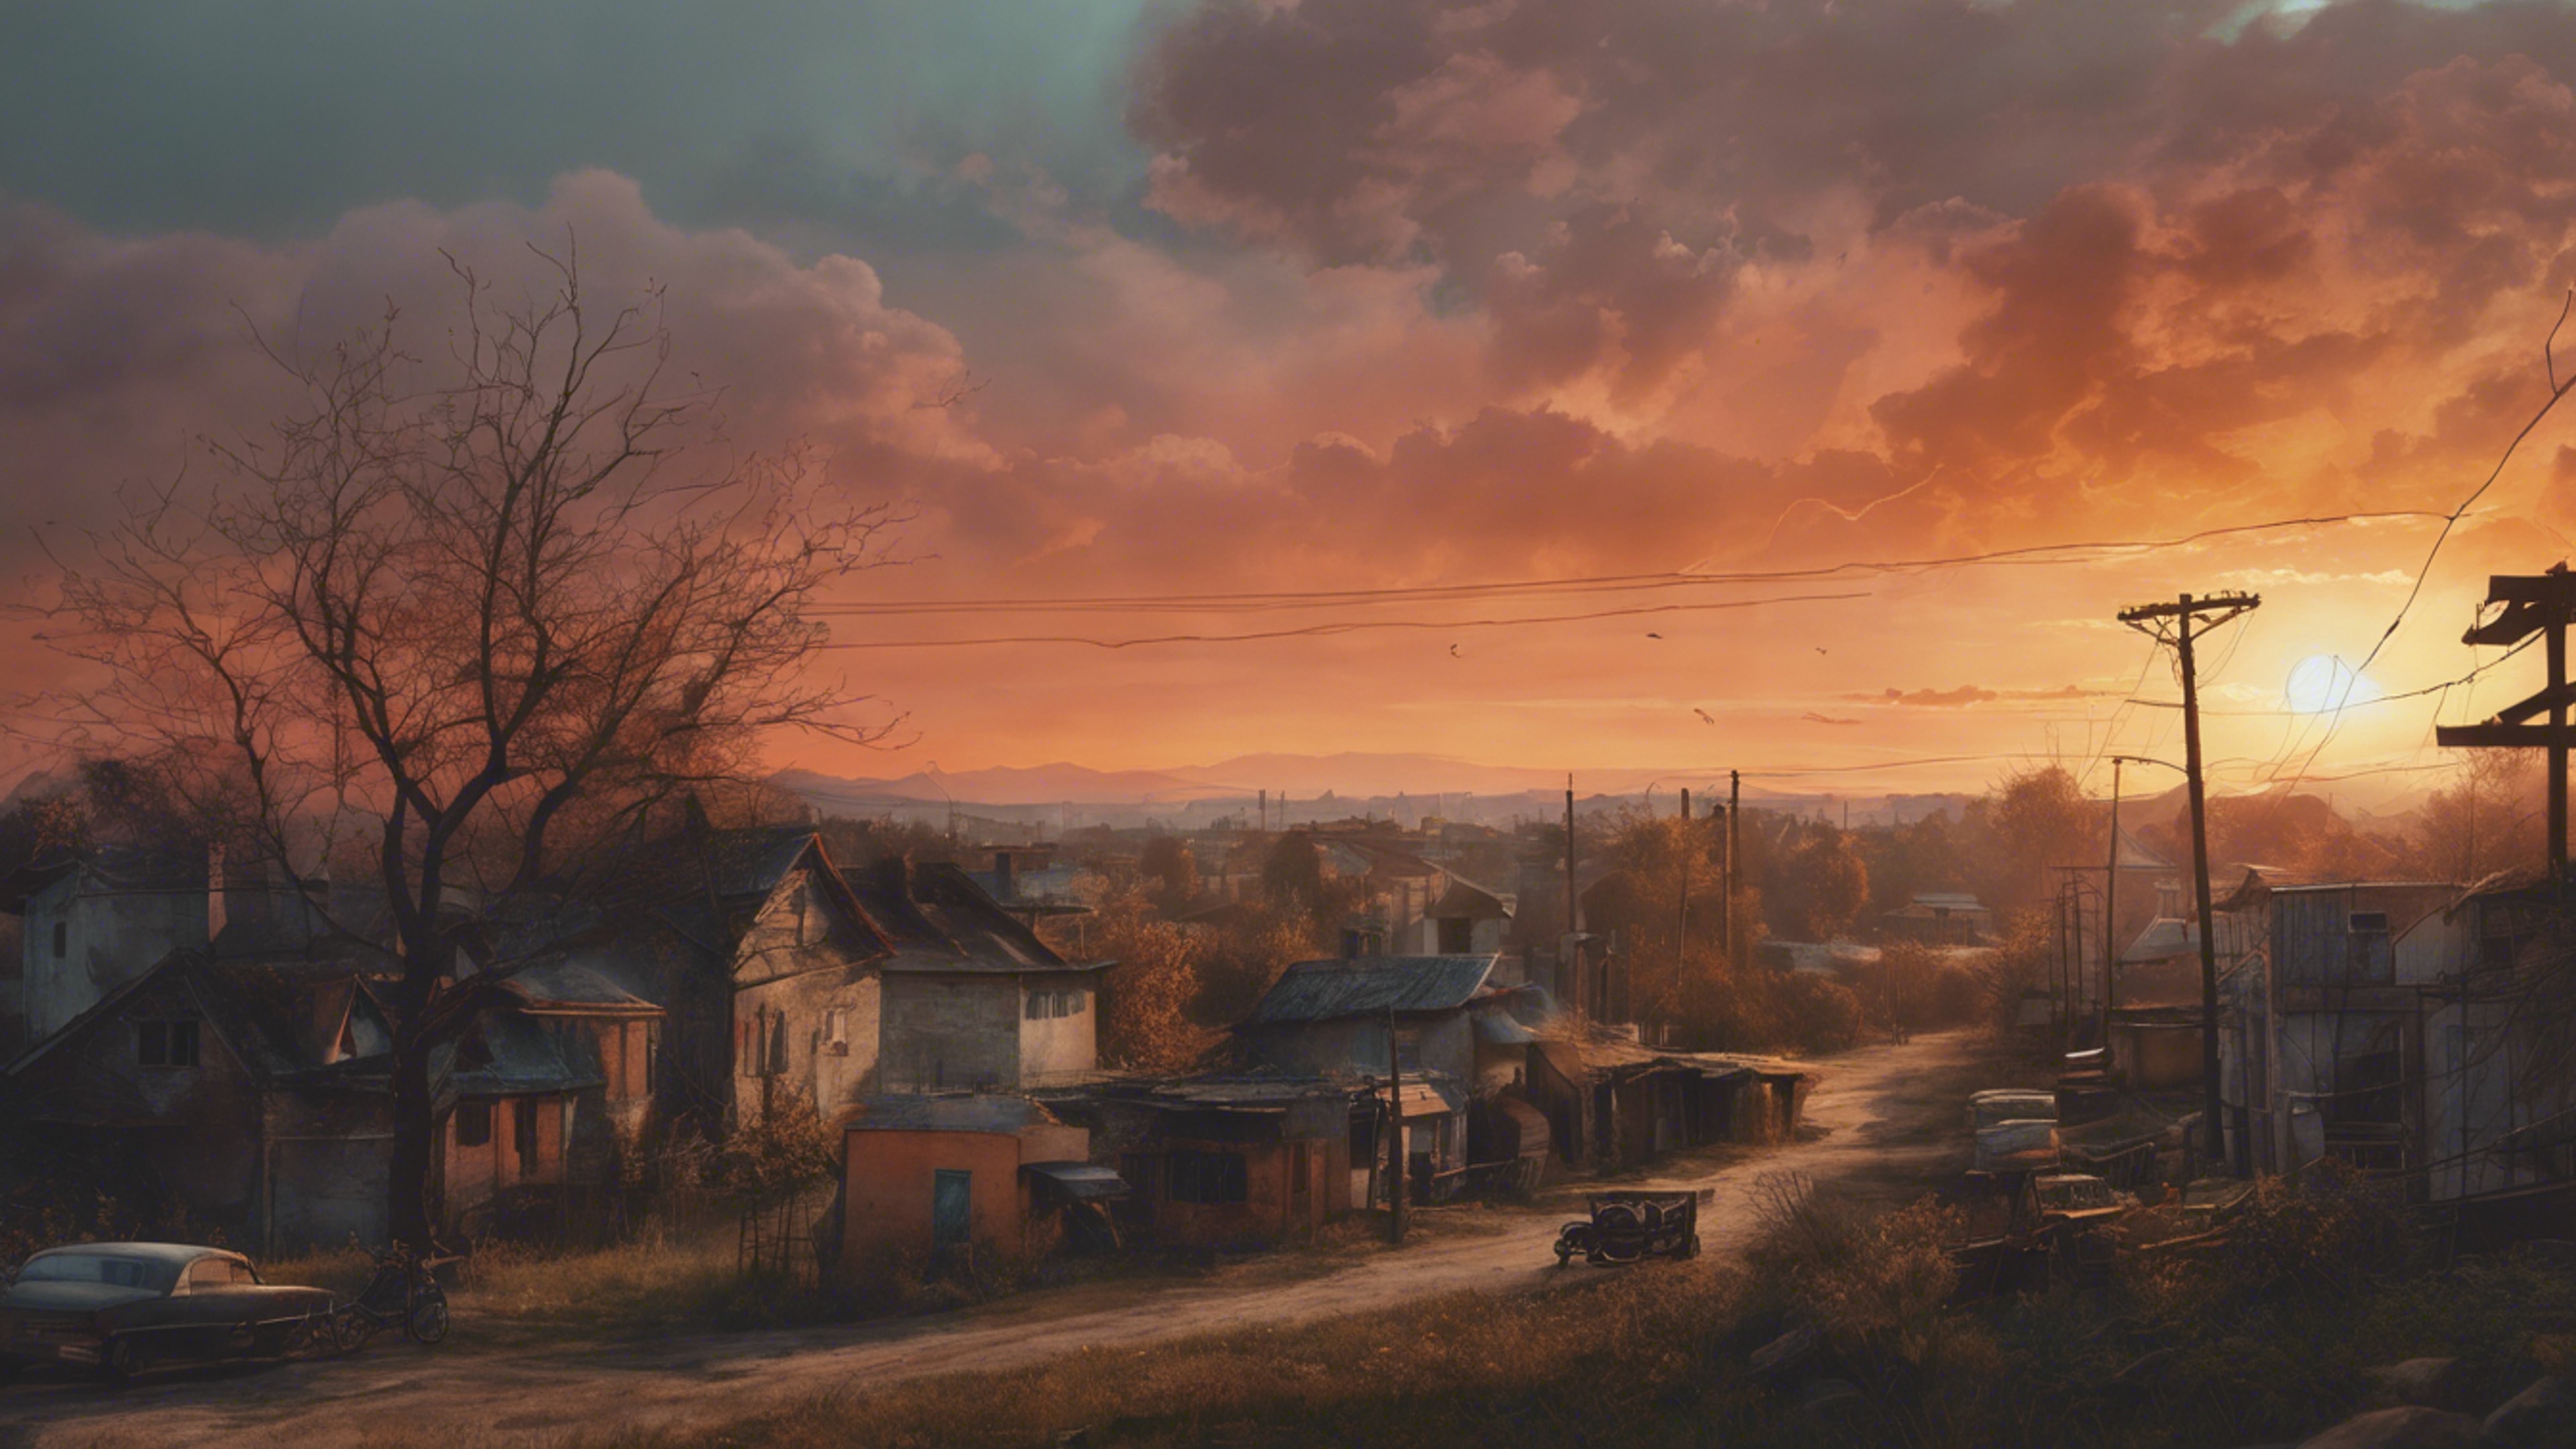 An evocative painting of a nostalgic sunset over a forgotten hometown. duvar kağıdı[c4b7fcd1dd4d40f1b7ab]